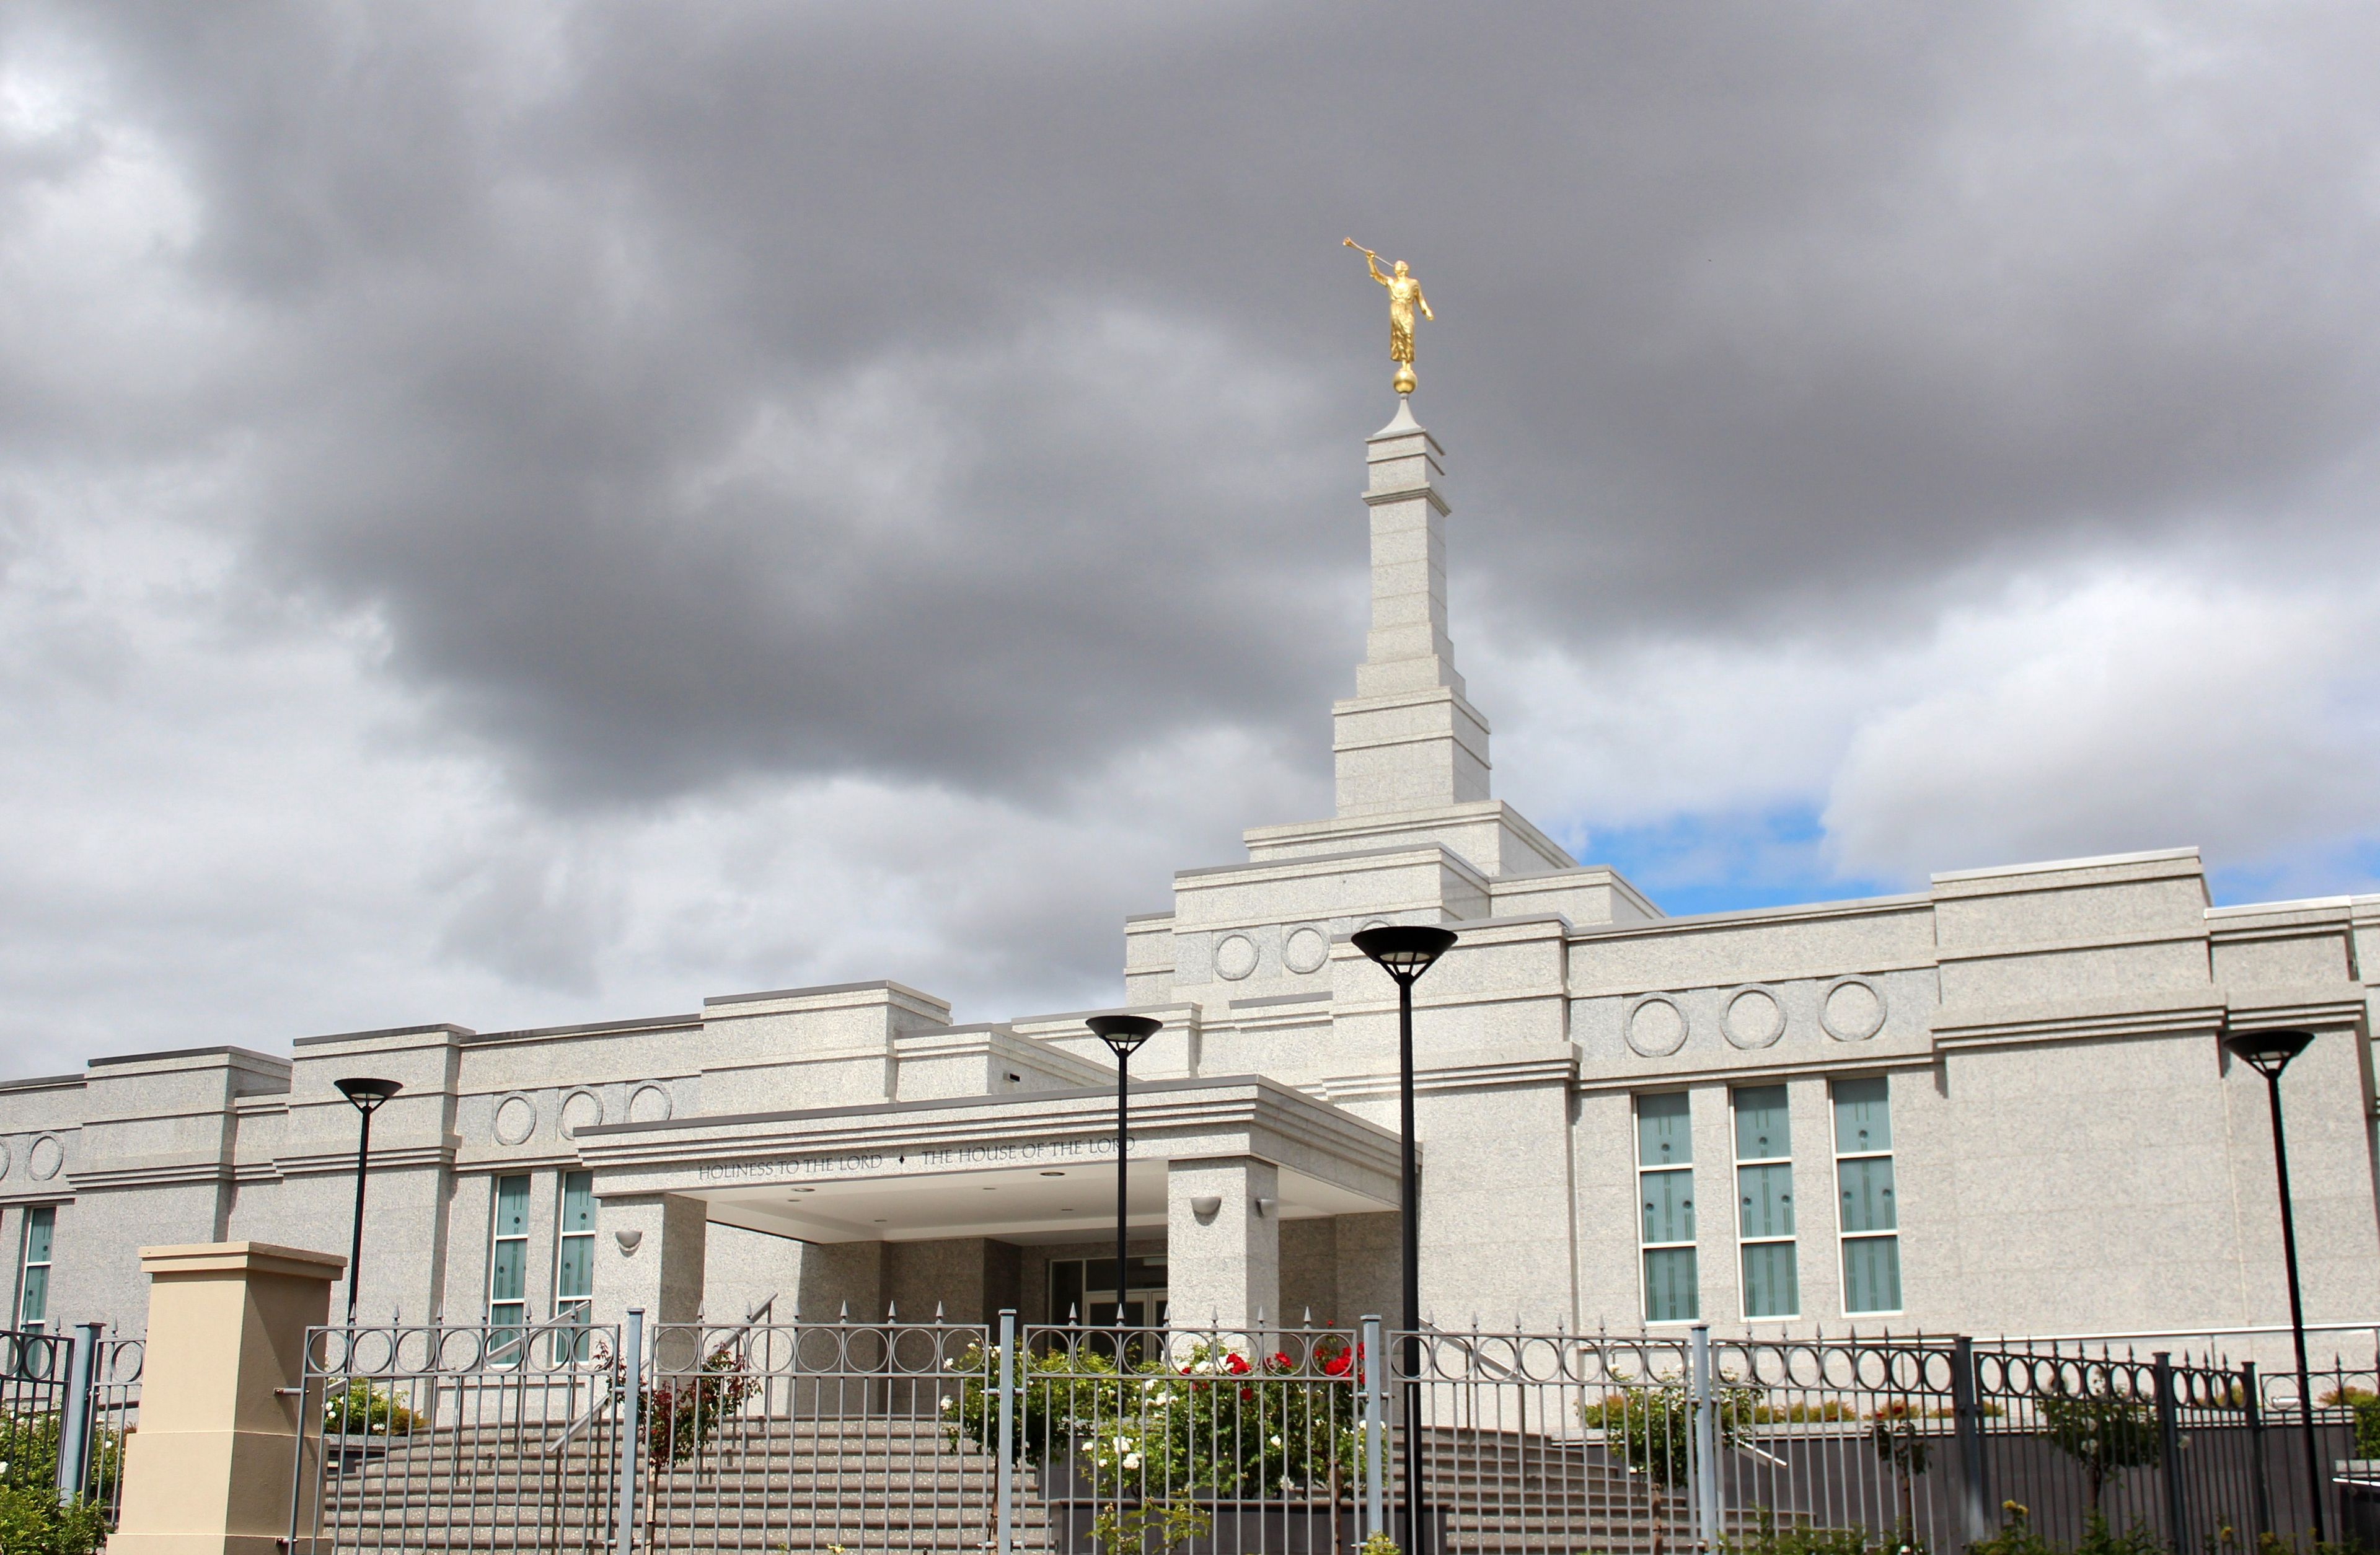 The Perth Australia Temple entrance, including scenery.